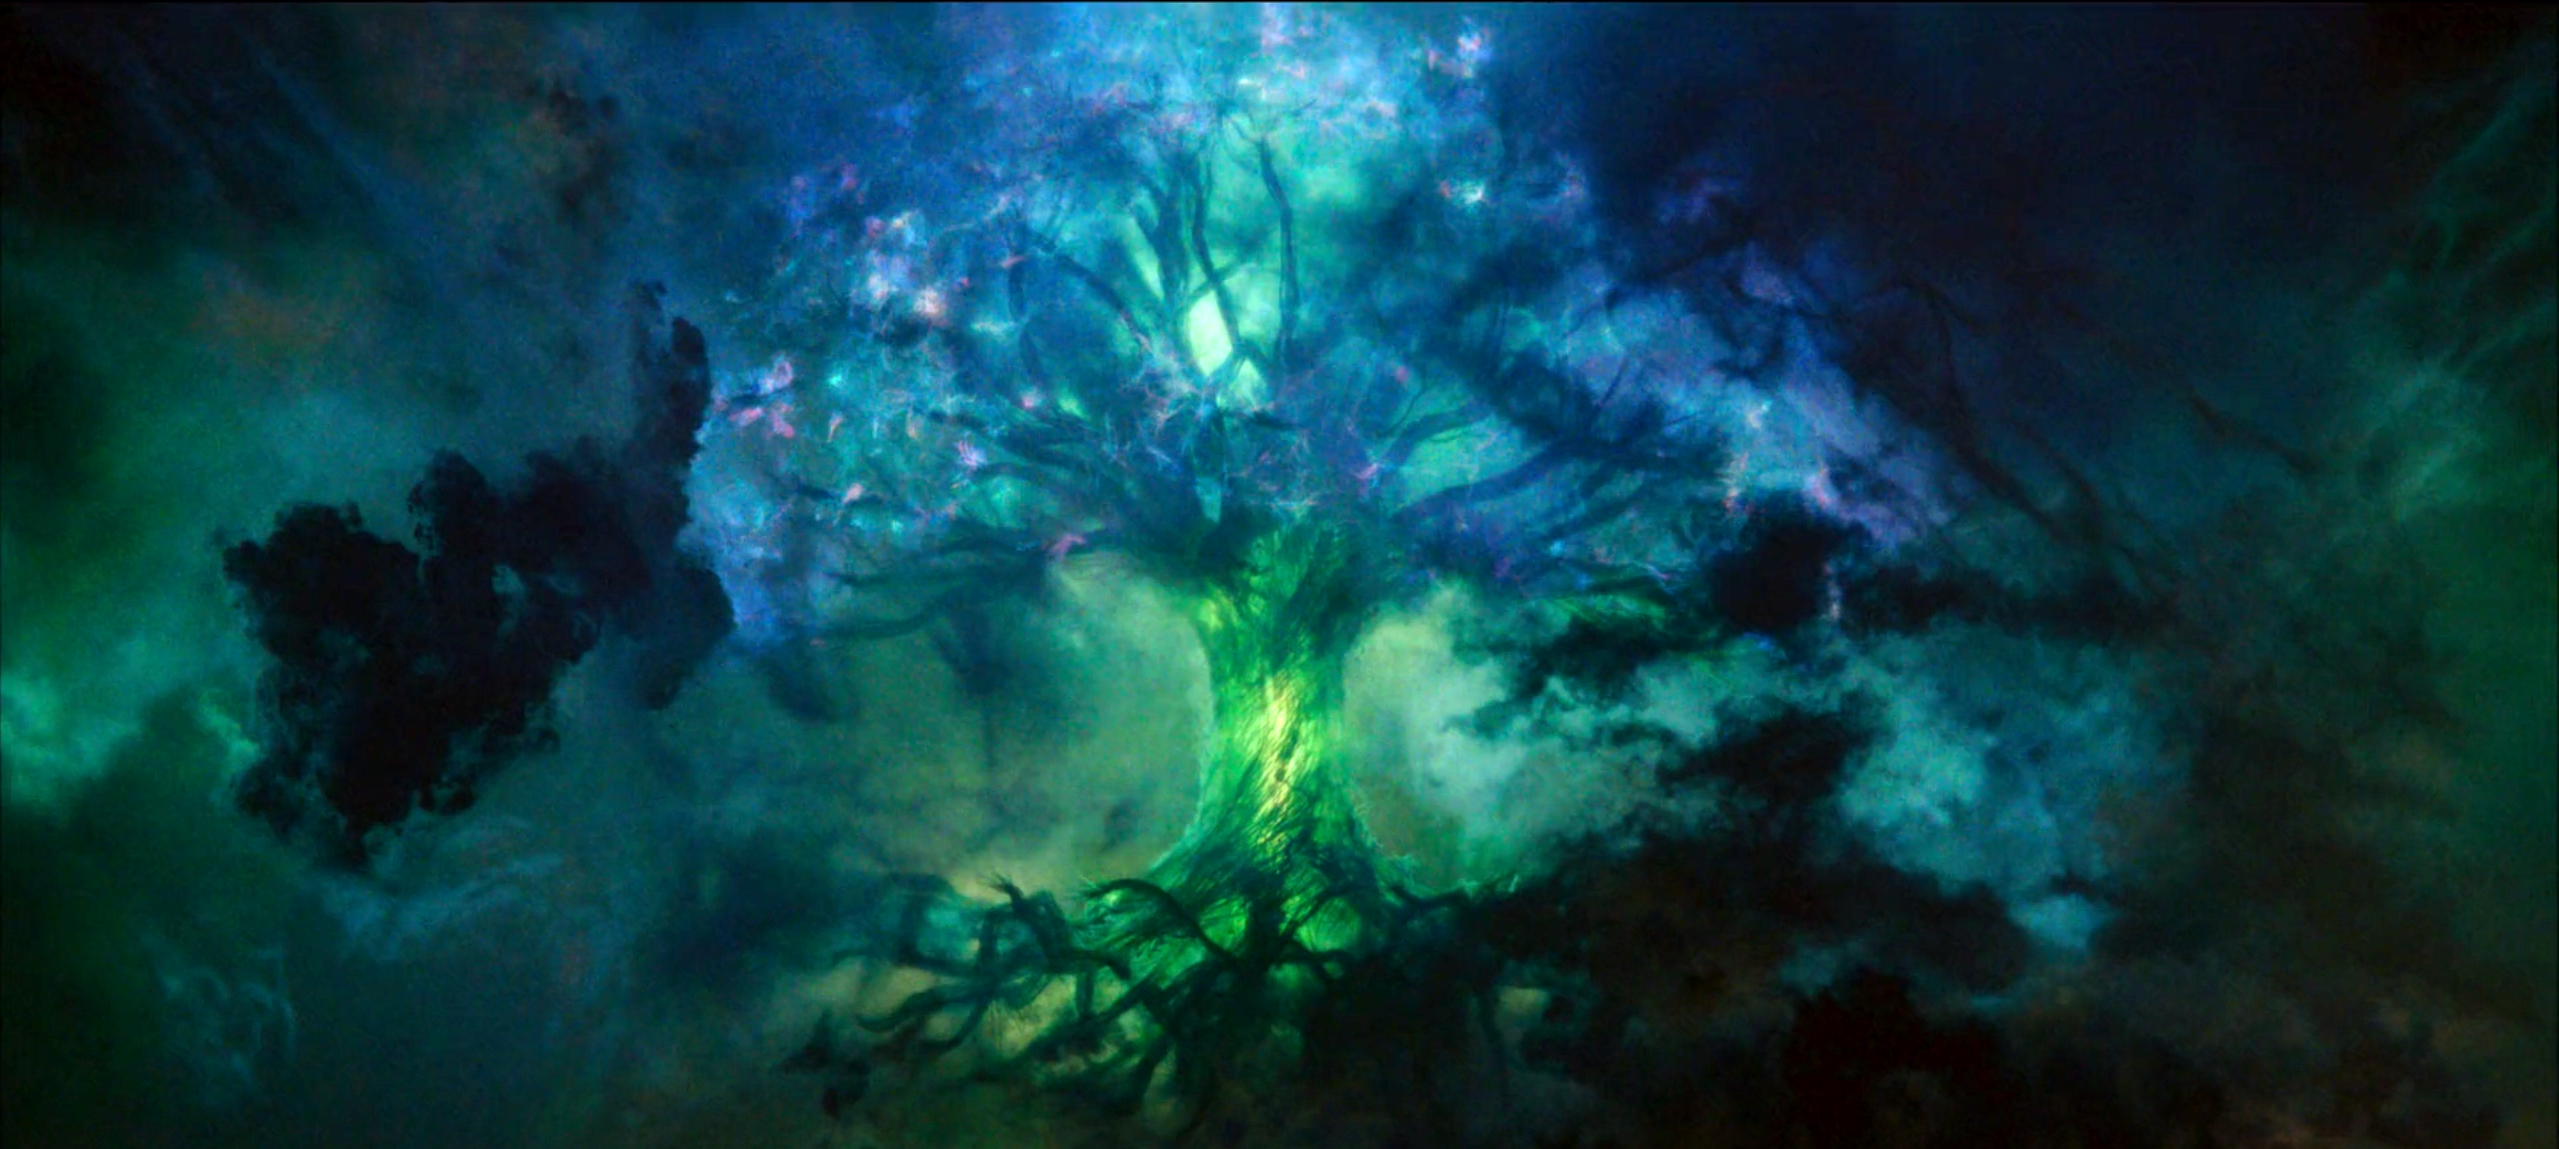 General 2559x1149 Yggdrasil Loki Marvel Cinematic Universe comics Nine Realms World's Tree digital art trees